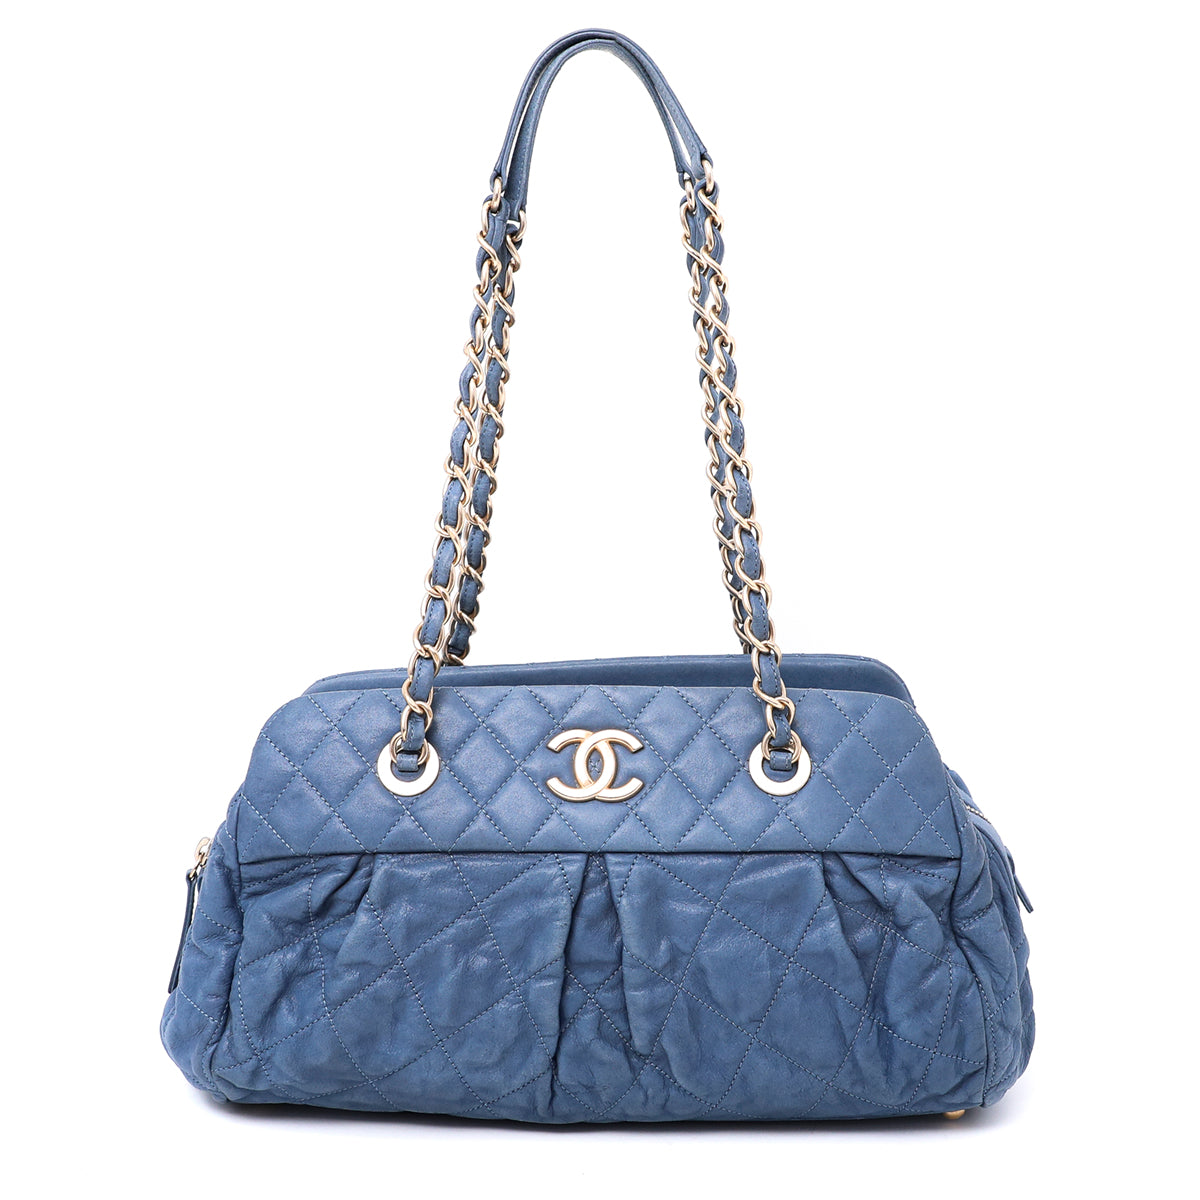 Chanel Blue CC Bowler Shopping Tote Bag